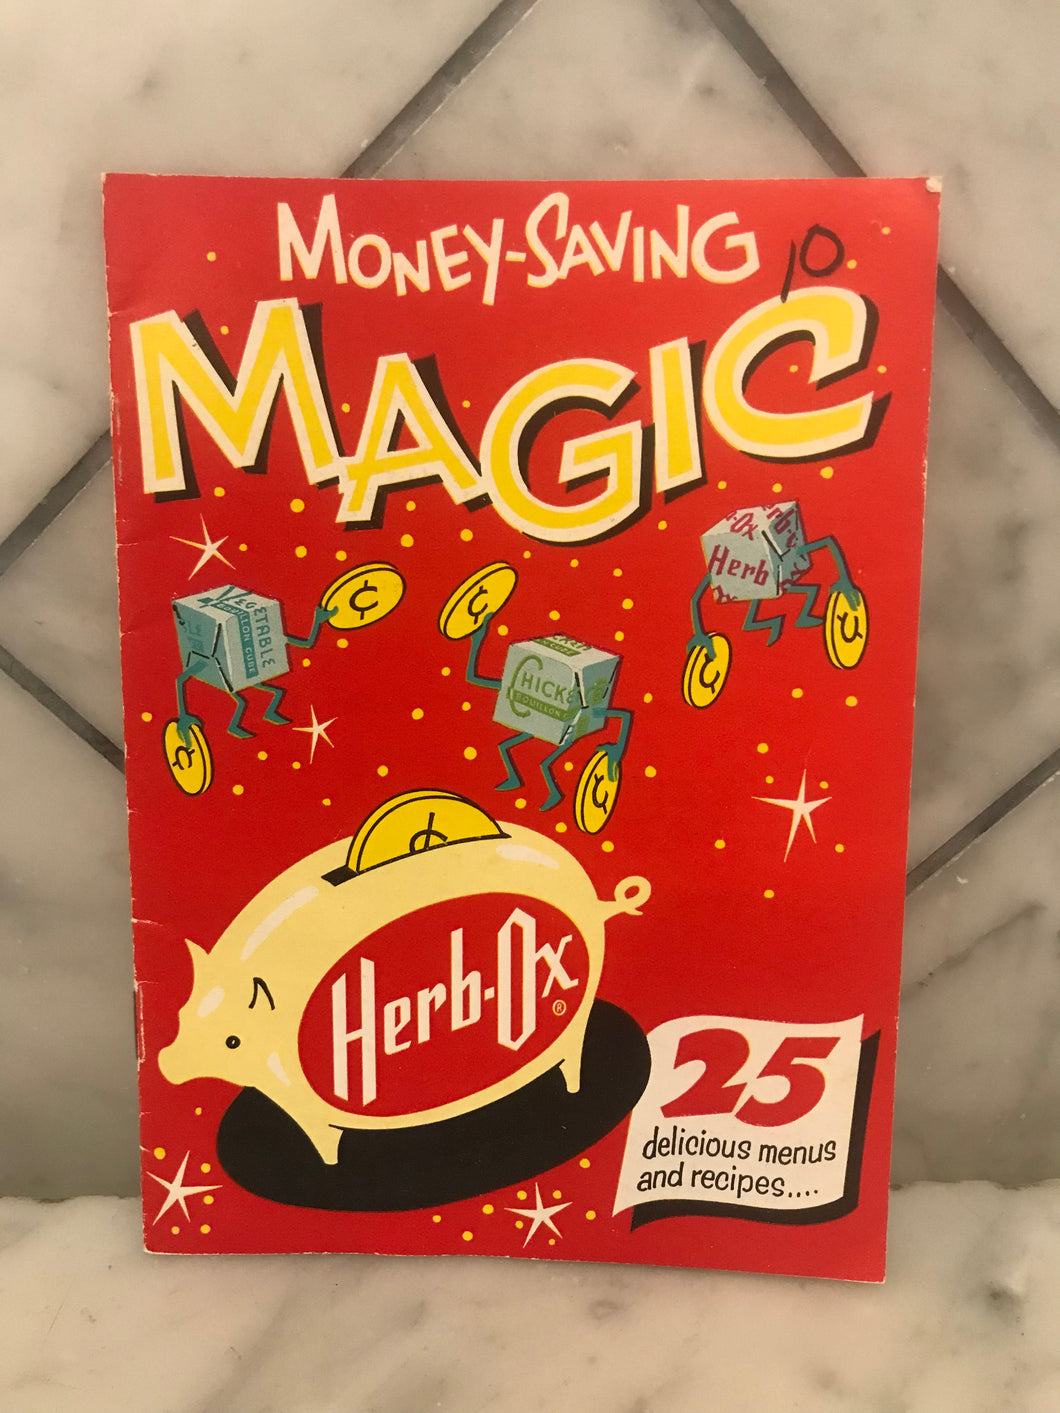 Money-Saving Magic, Herb-Oz, 25 Delicious Menus and Recipes...